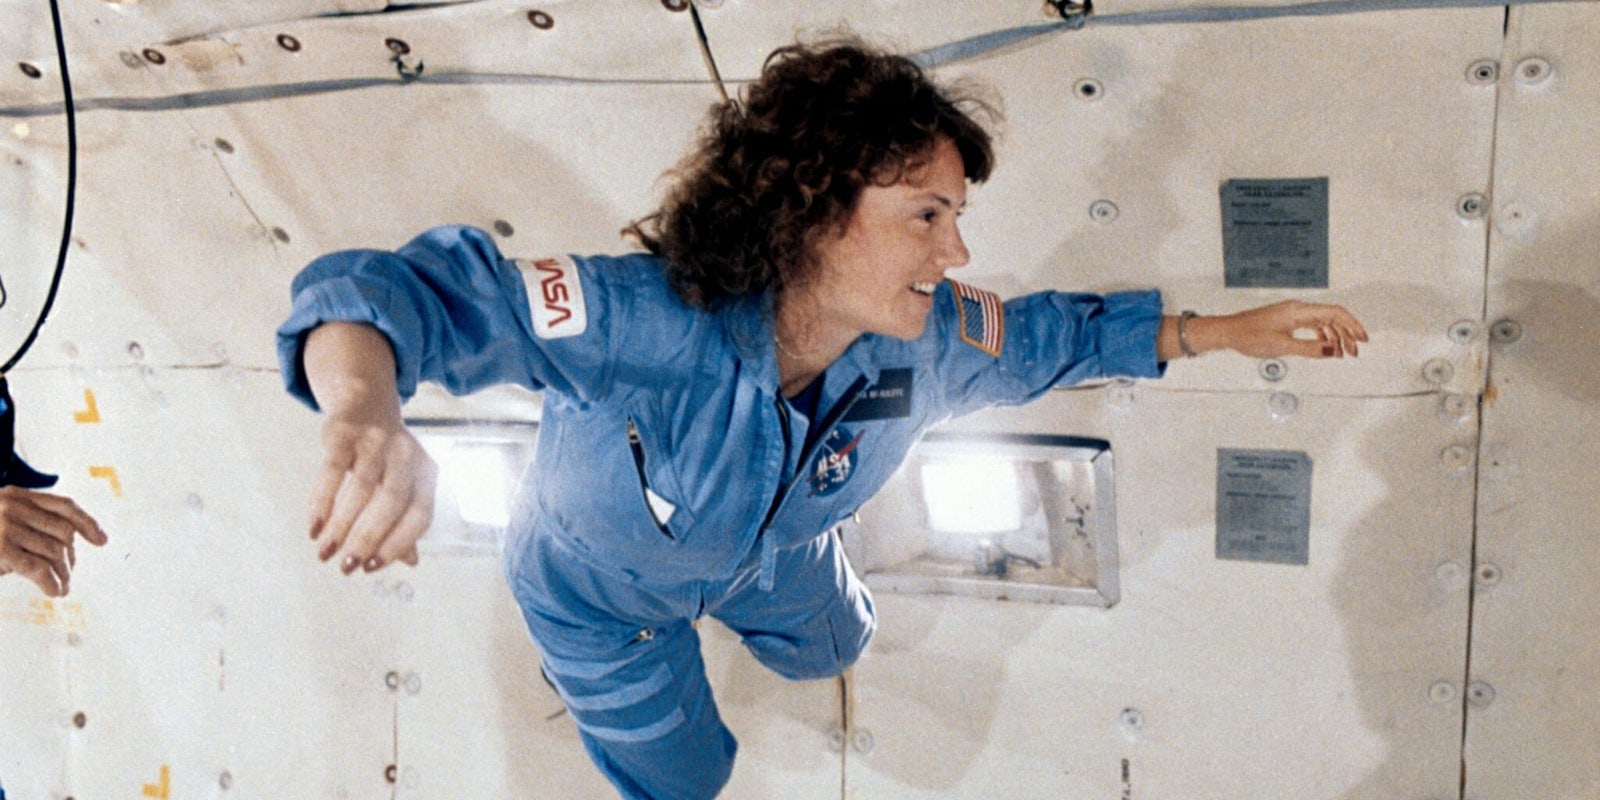 NASA astronaut Christa McAuliffe floating